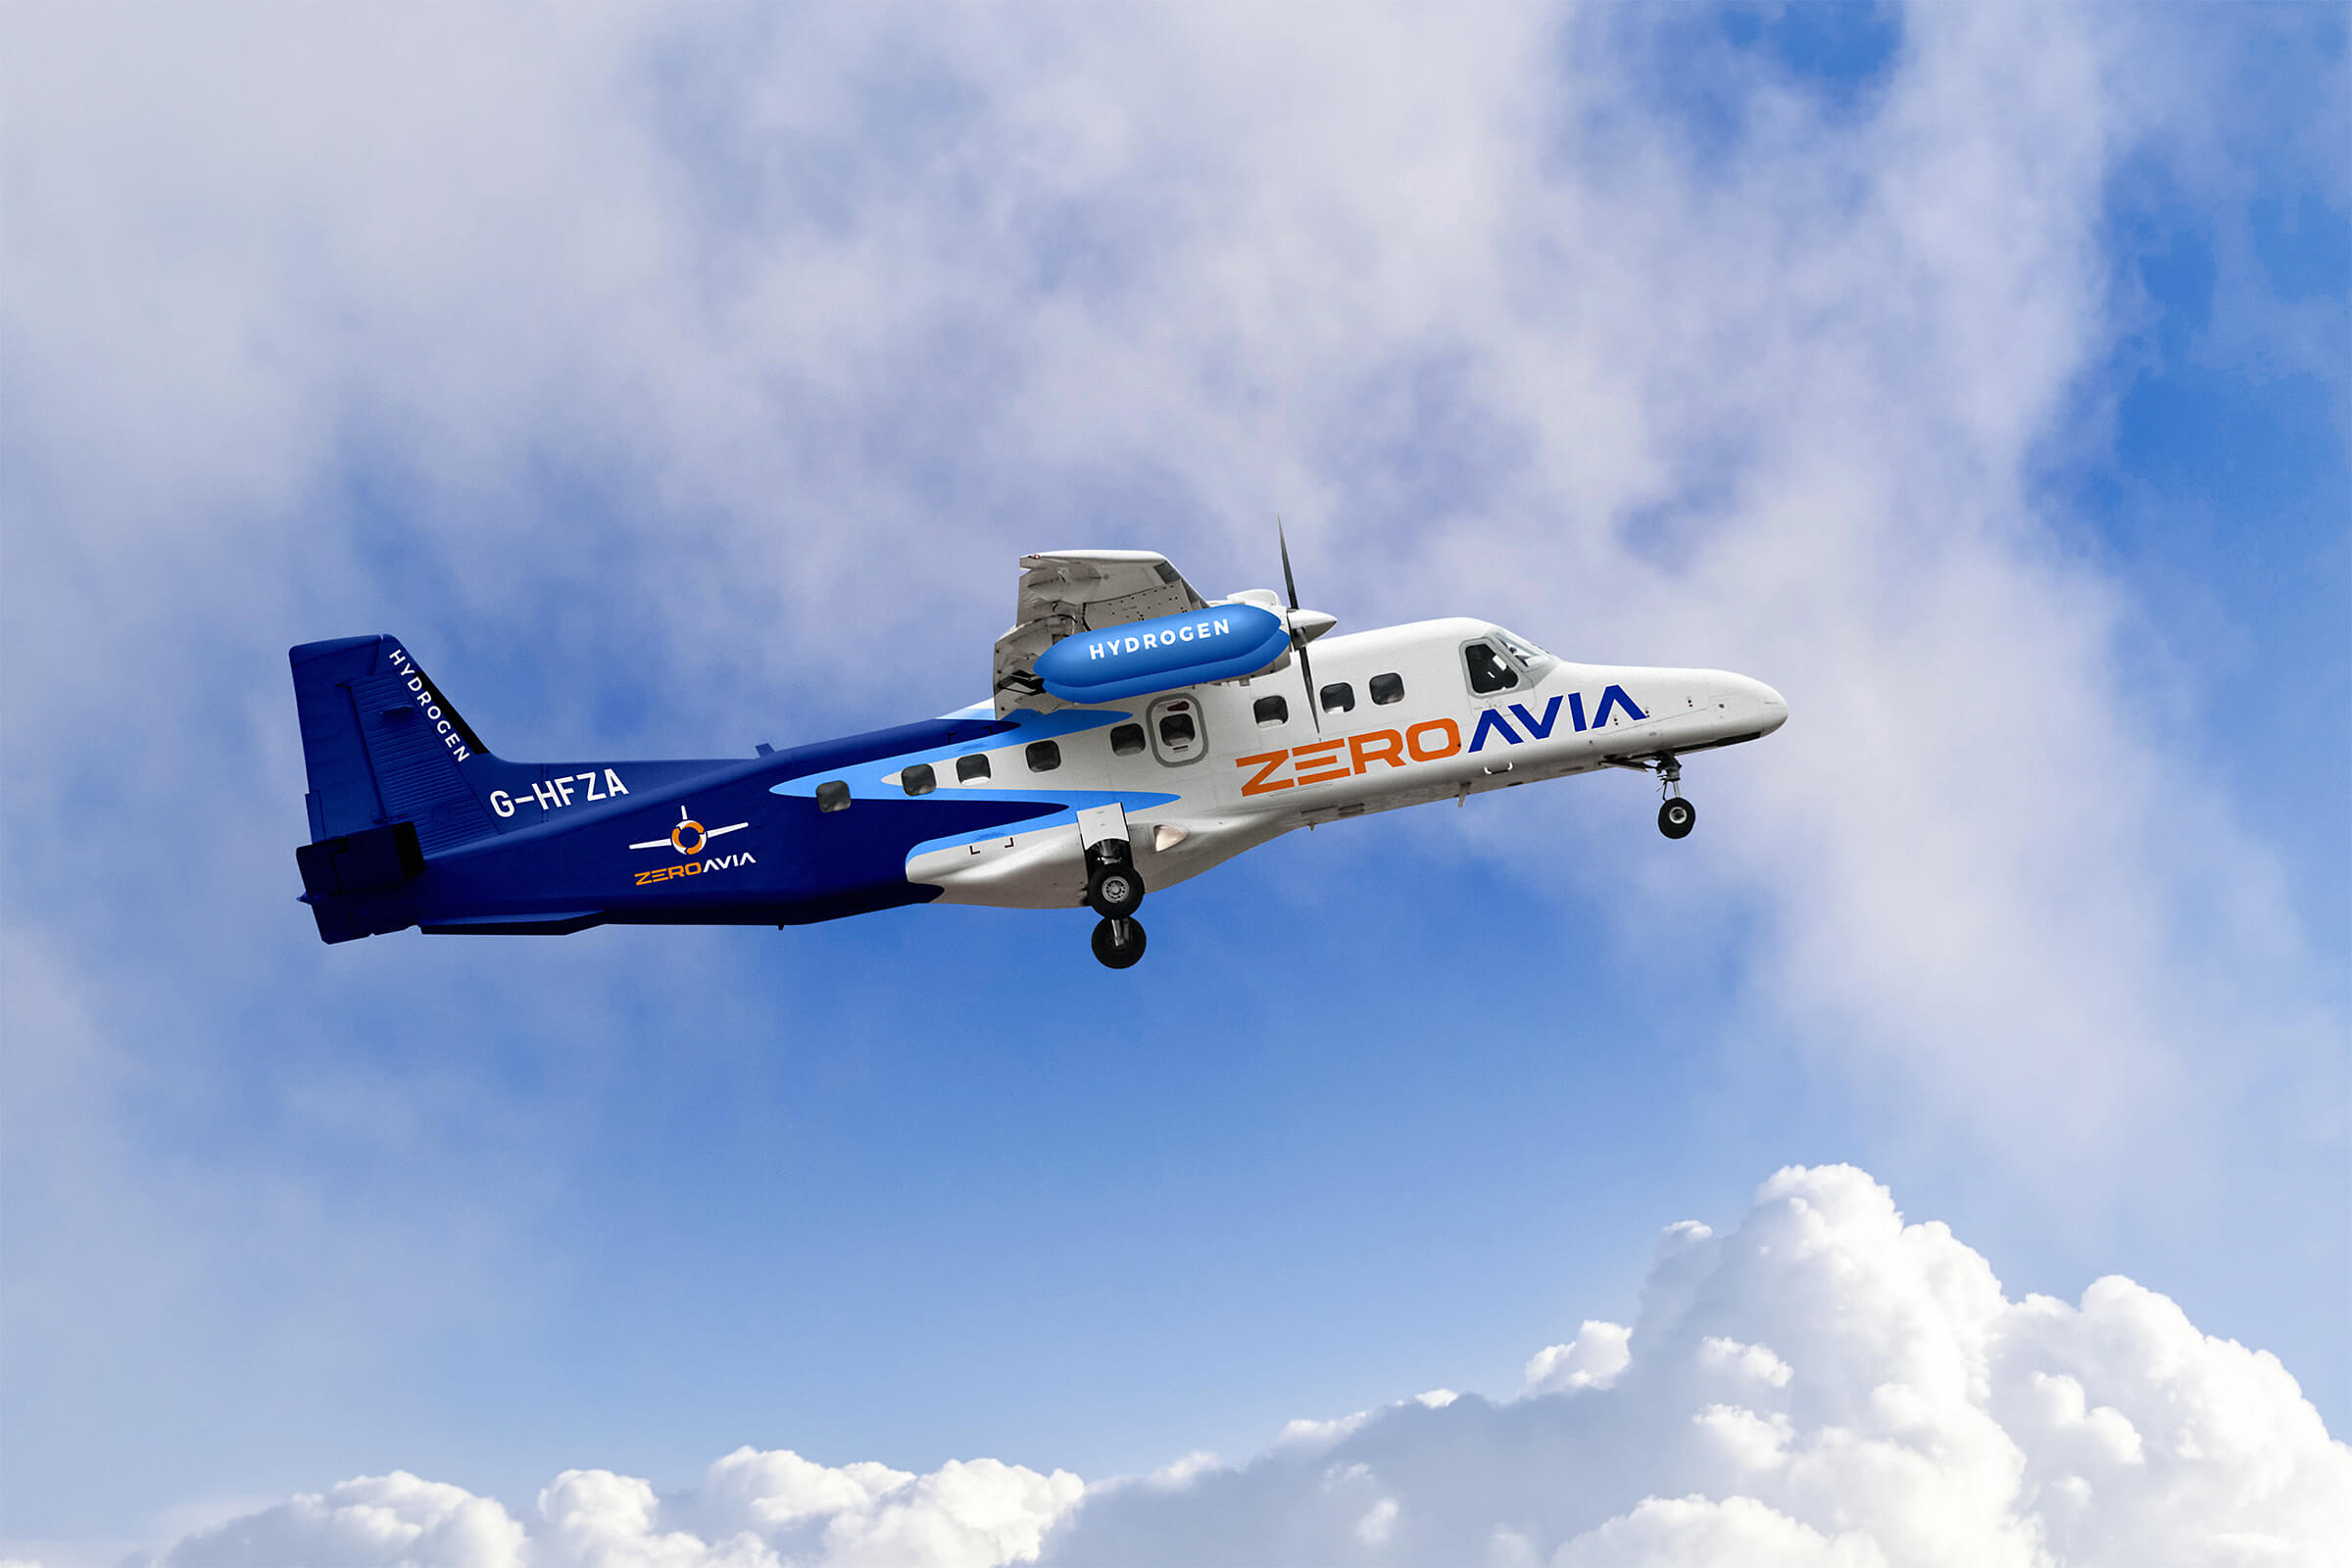 ZeroAvia hydrogen aircraft in flight